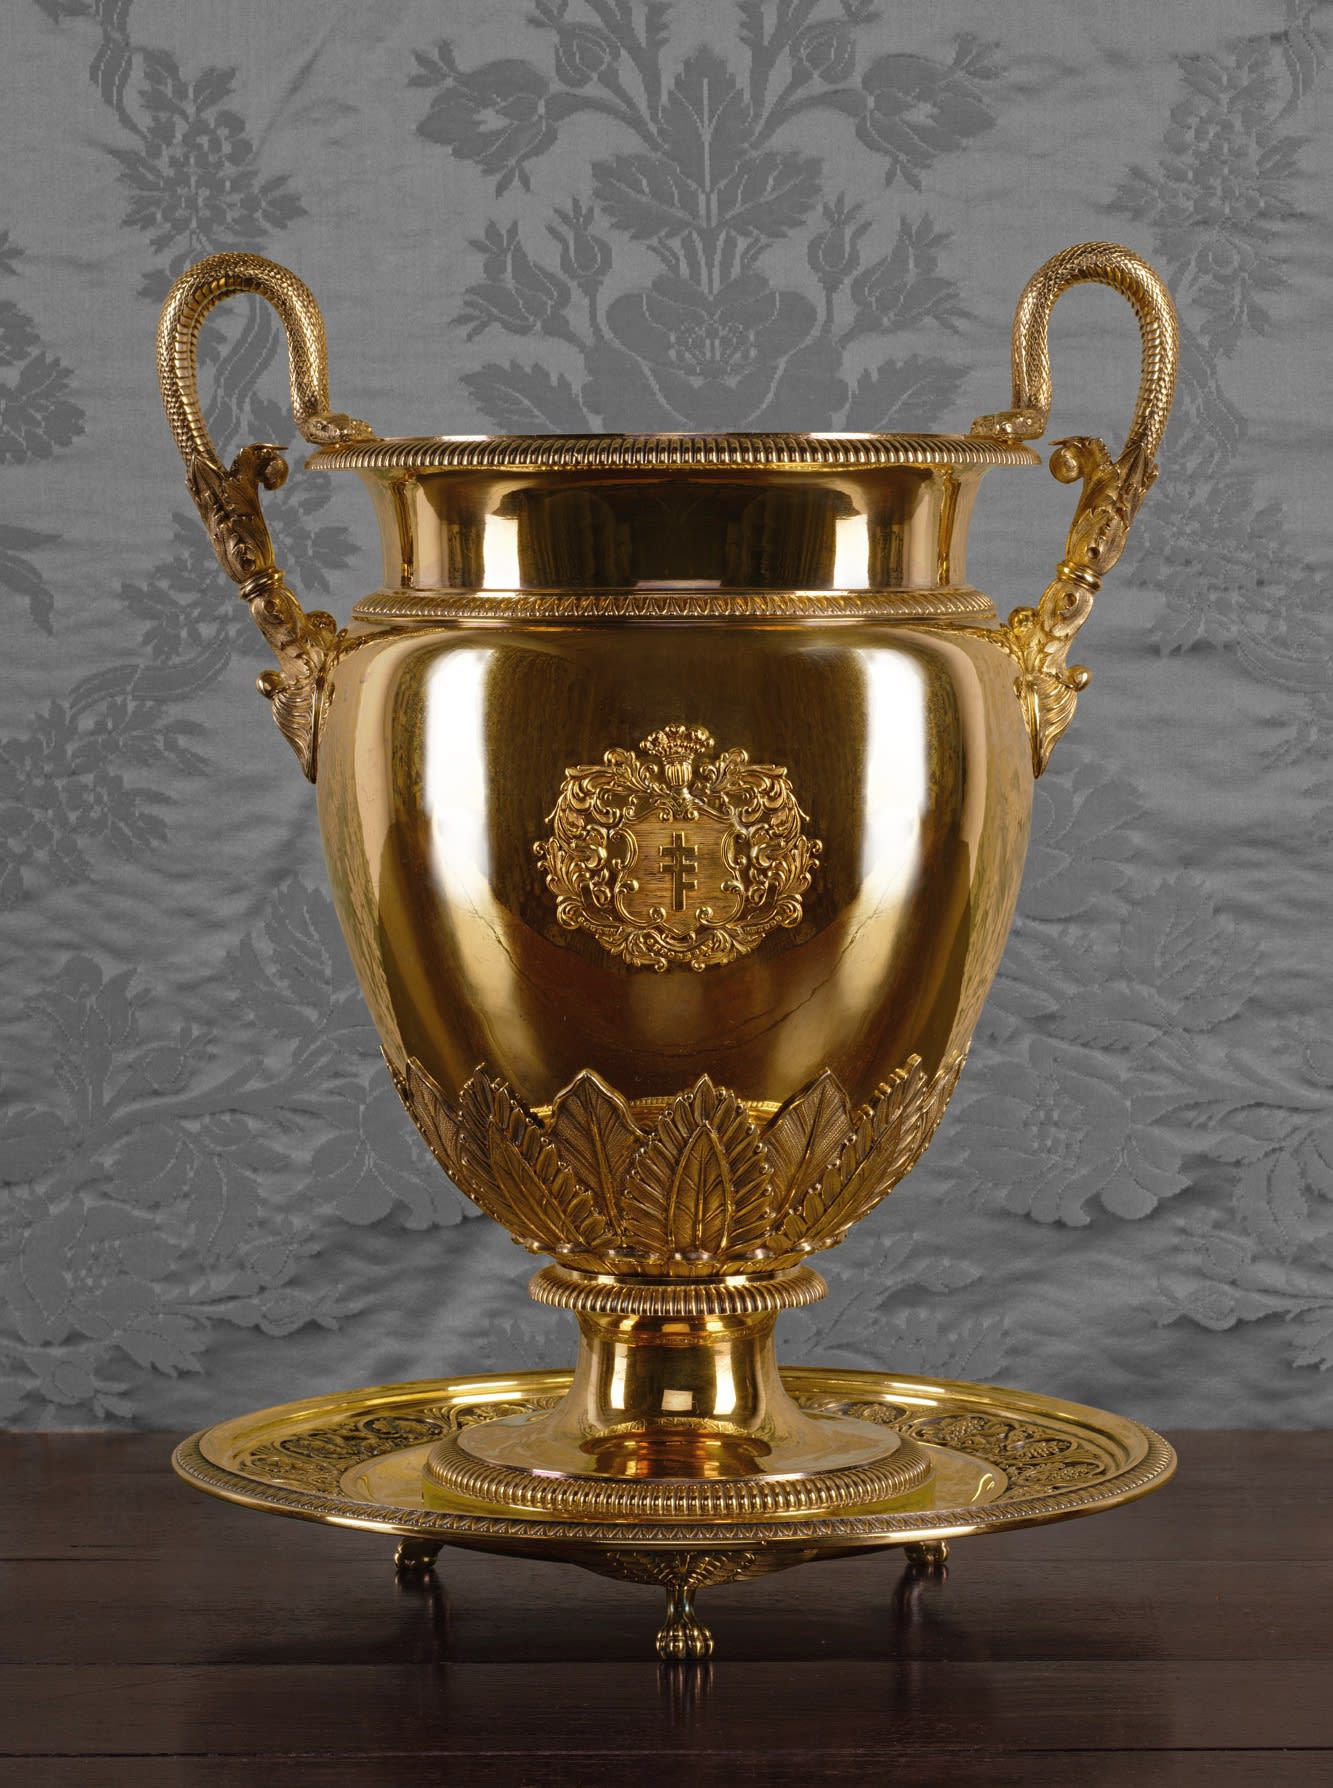 Russian Brass Teapot - Joseph Joseph & Joseph: Antiques And Architectural